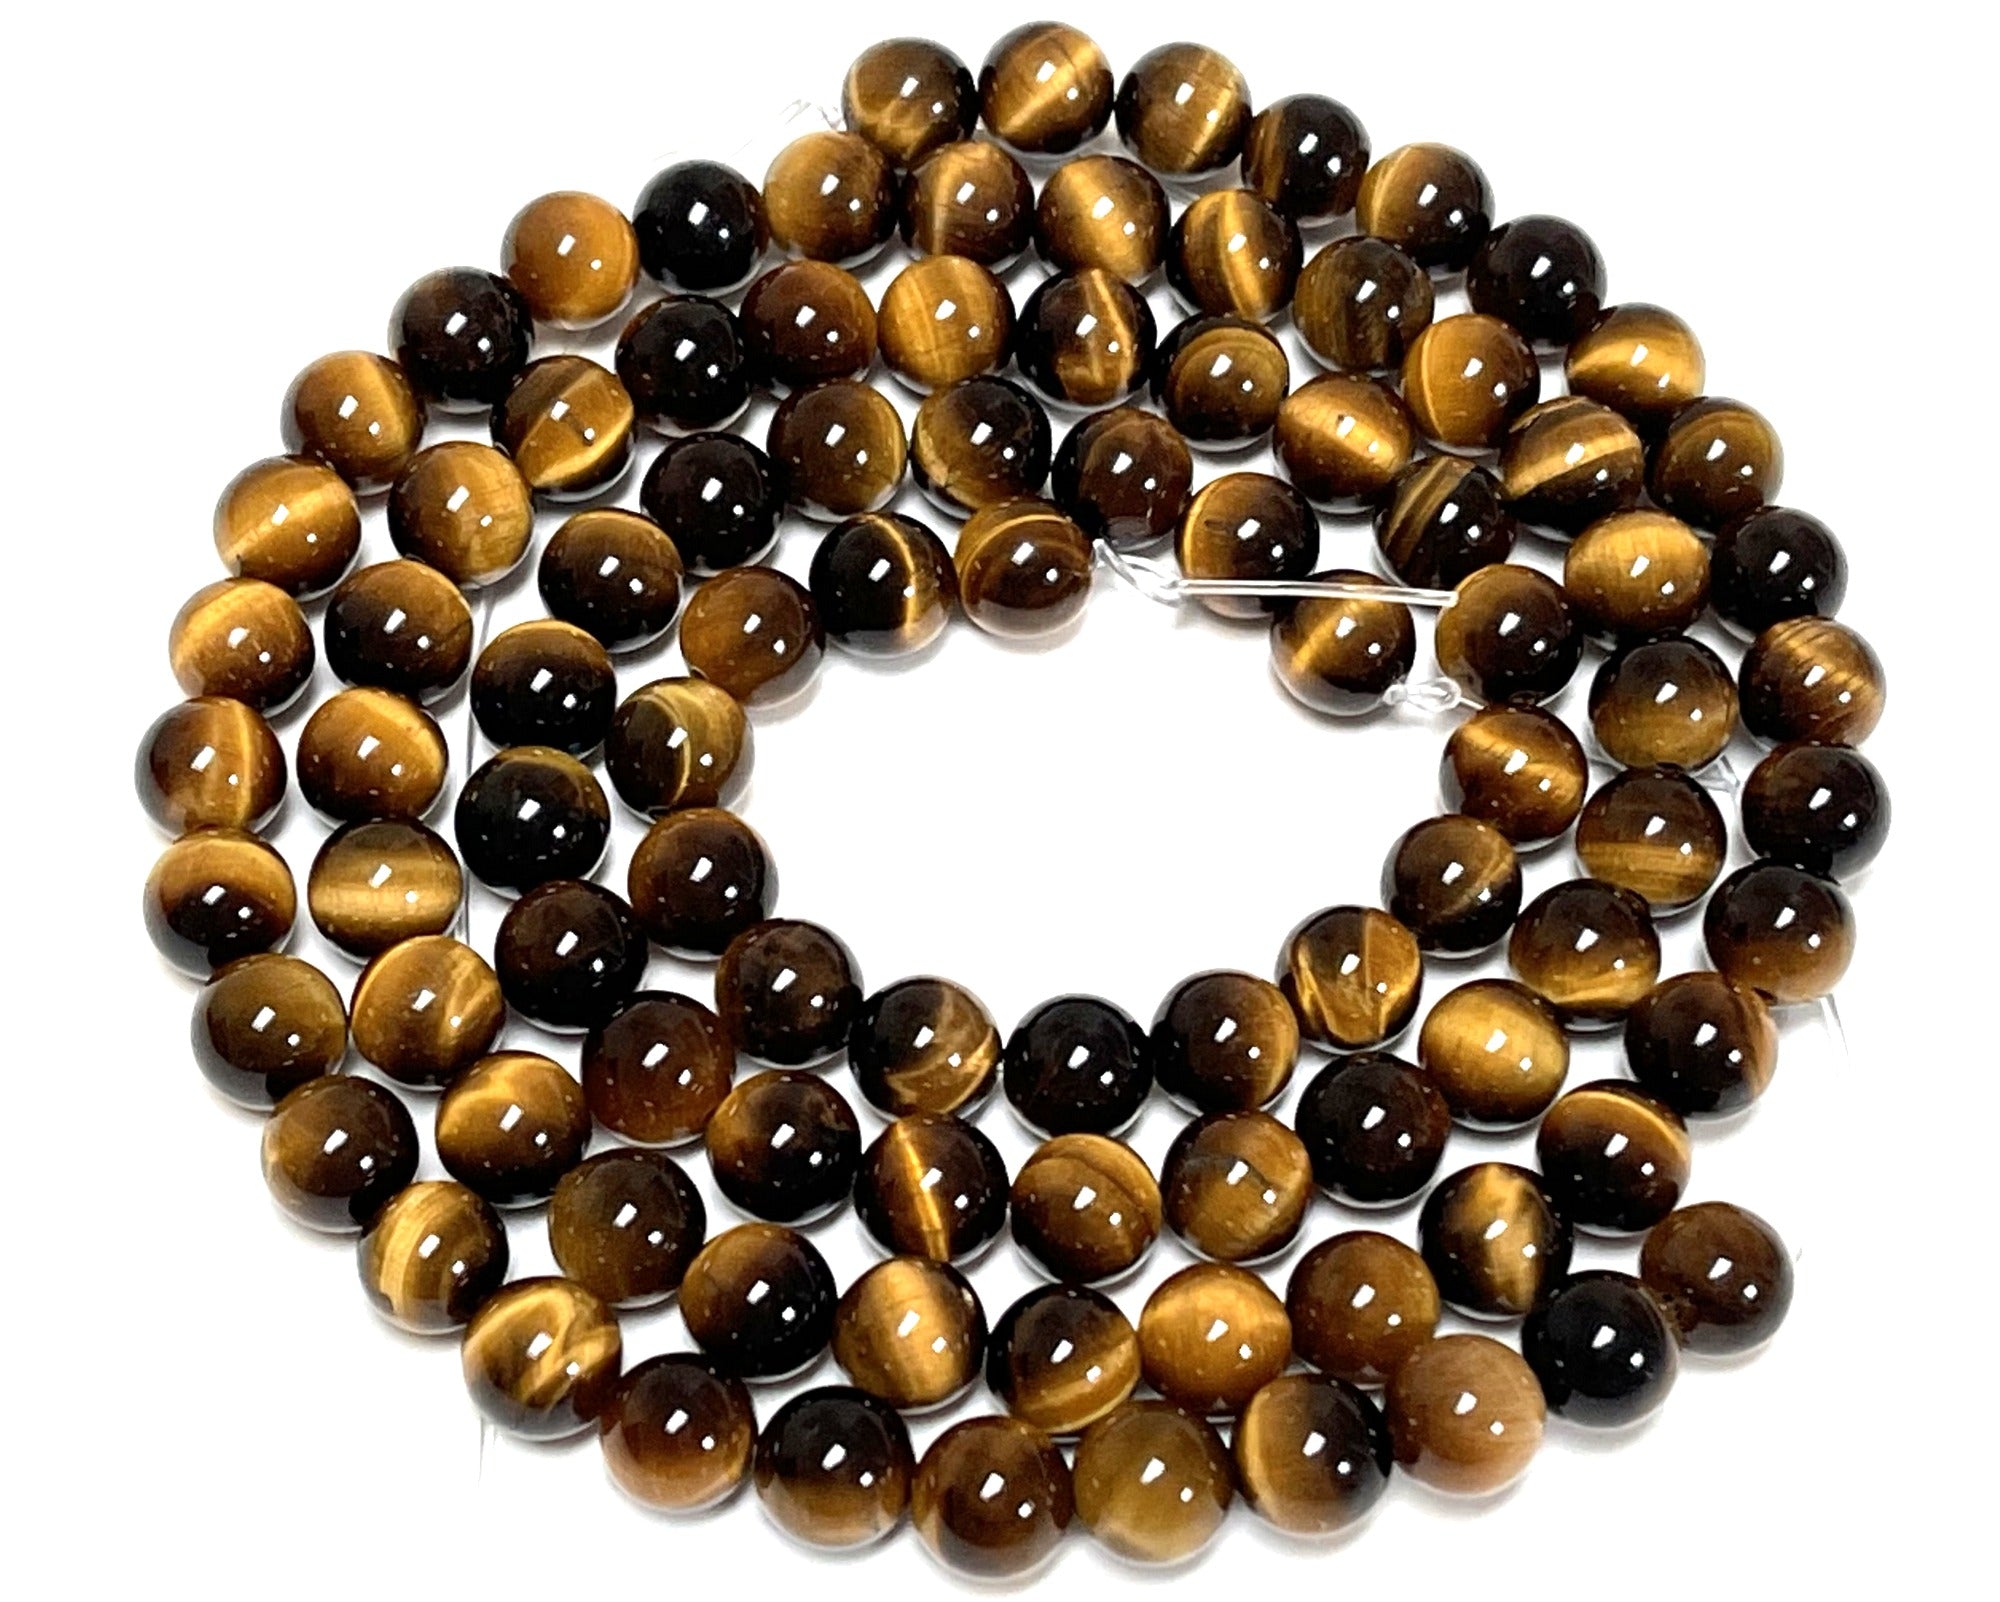 Yellow Tiger Eye 8mm round polished gemstone beads 15.5" strand - Oz Beads 